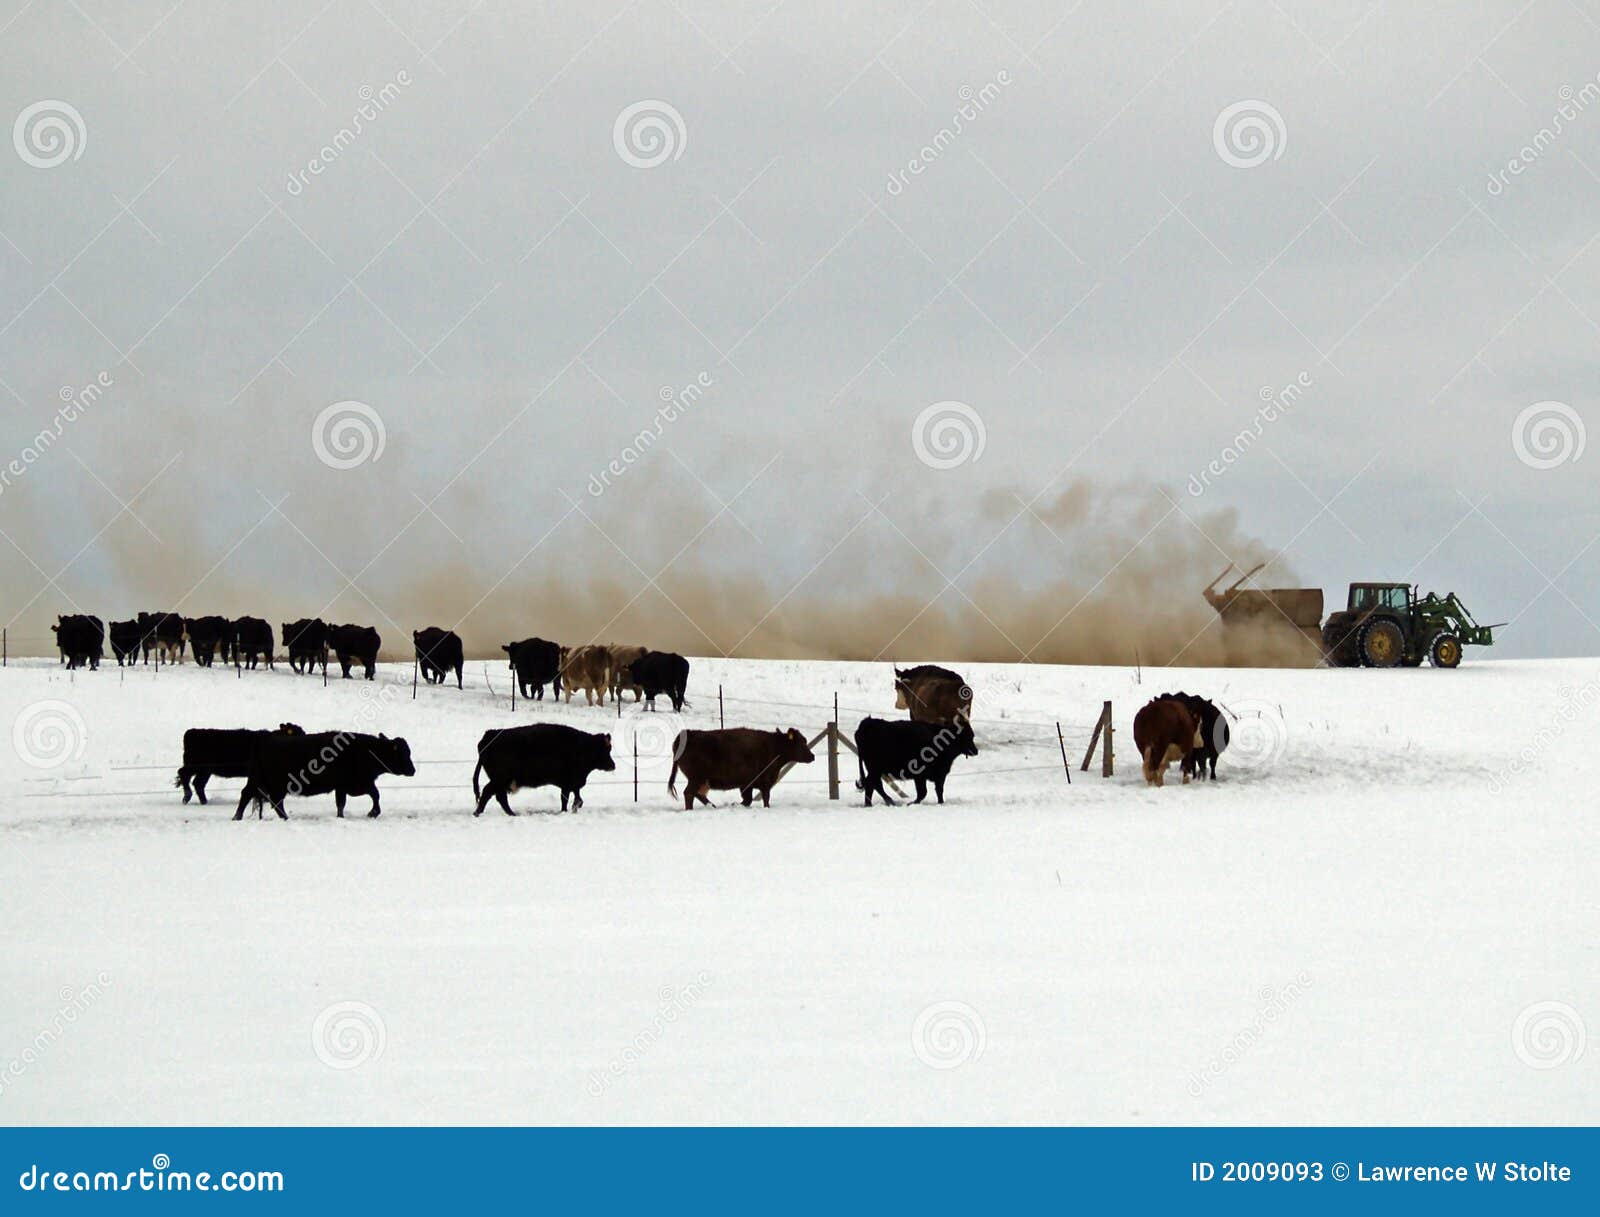 feeding the cattle